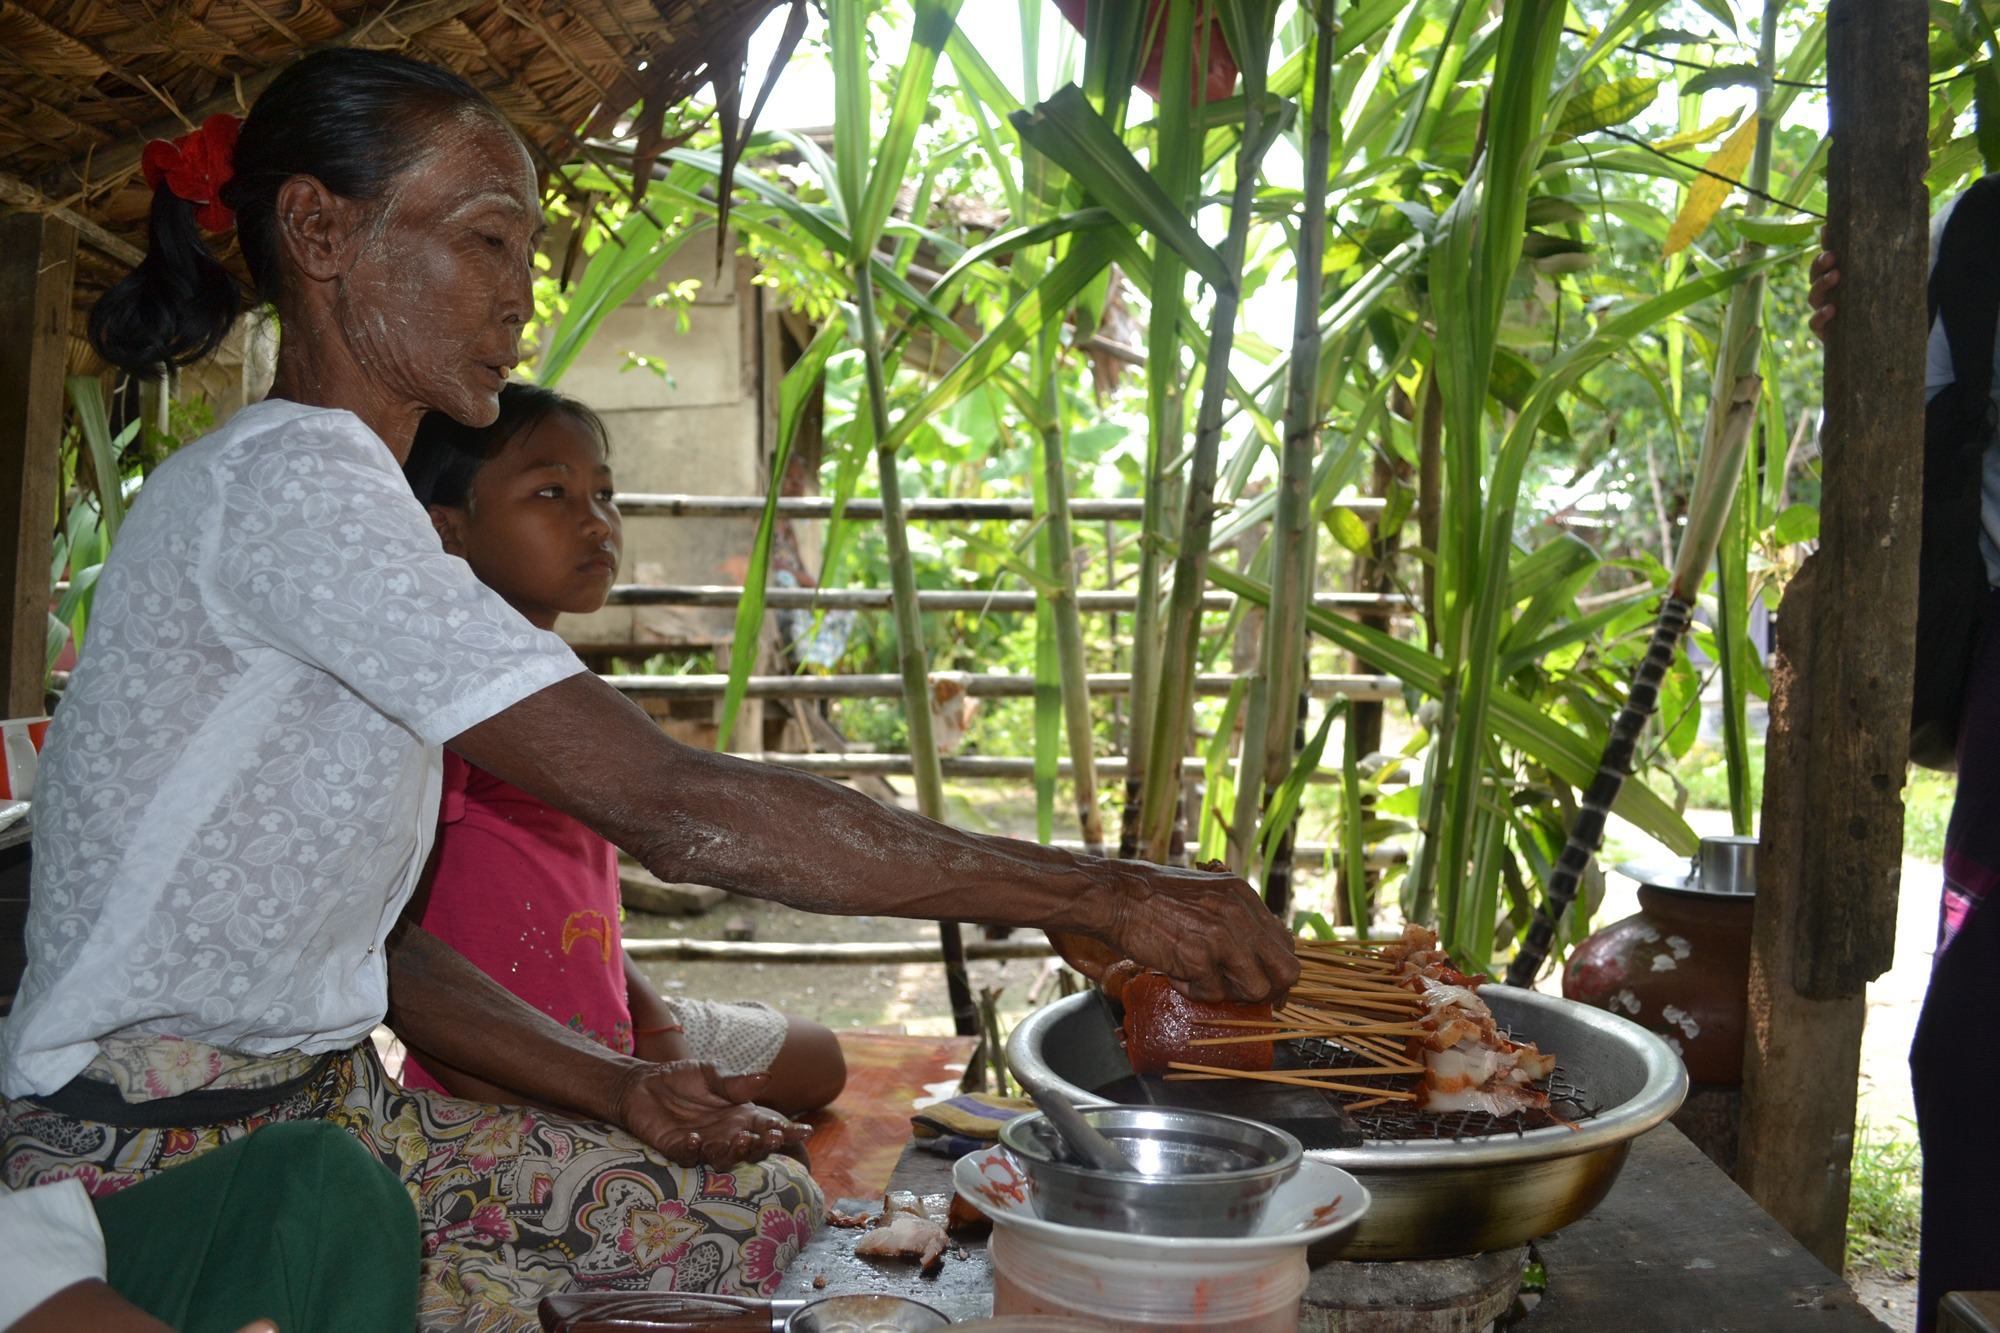 Daw Daw preparing food items she sells to make income